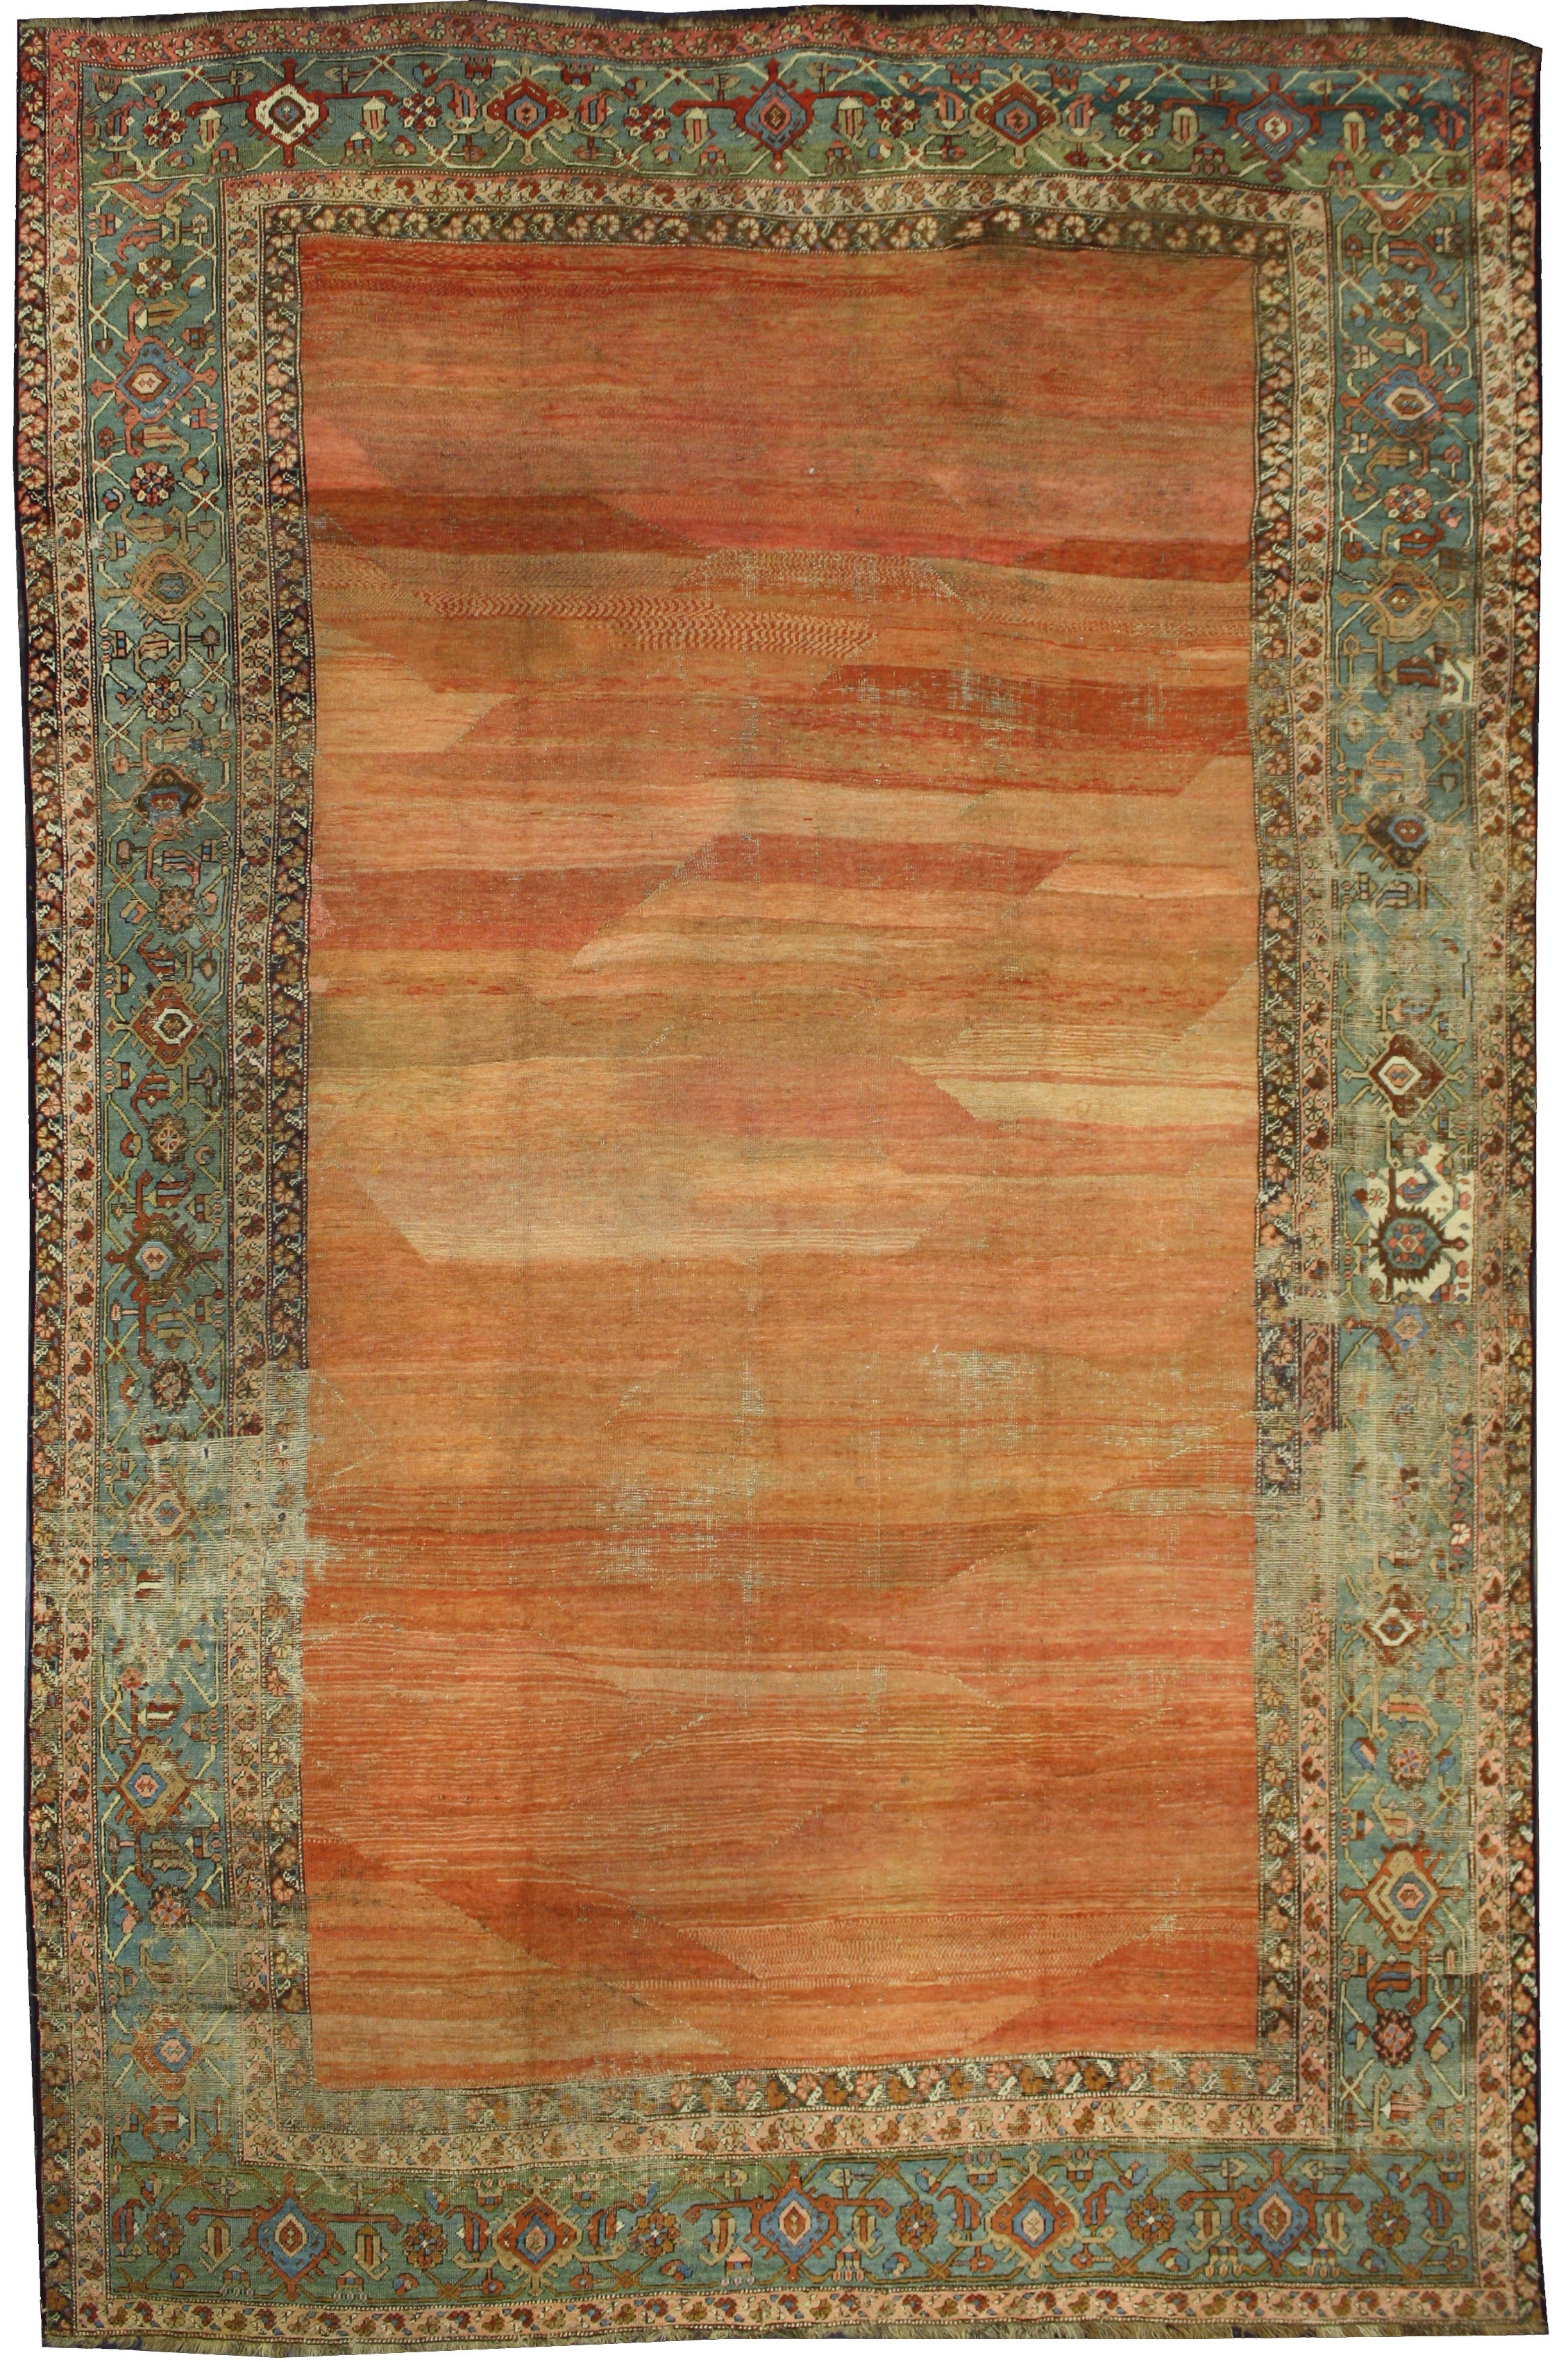 Mid-19th Century Antique Persian Bakshaish Rug with Rustic Mediterranean Style